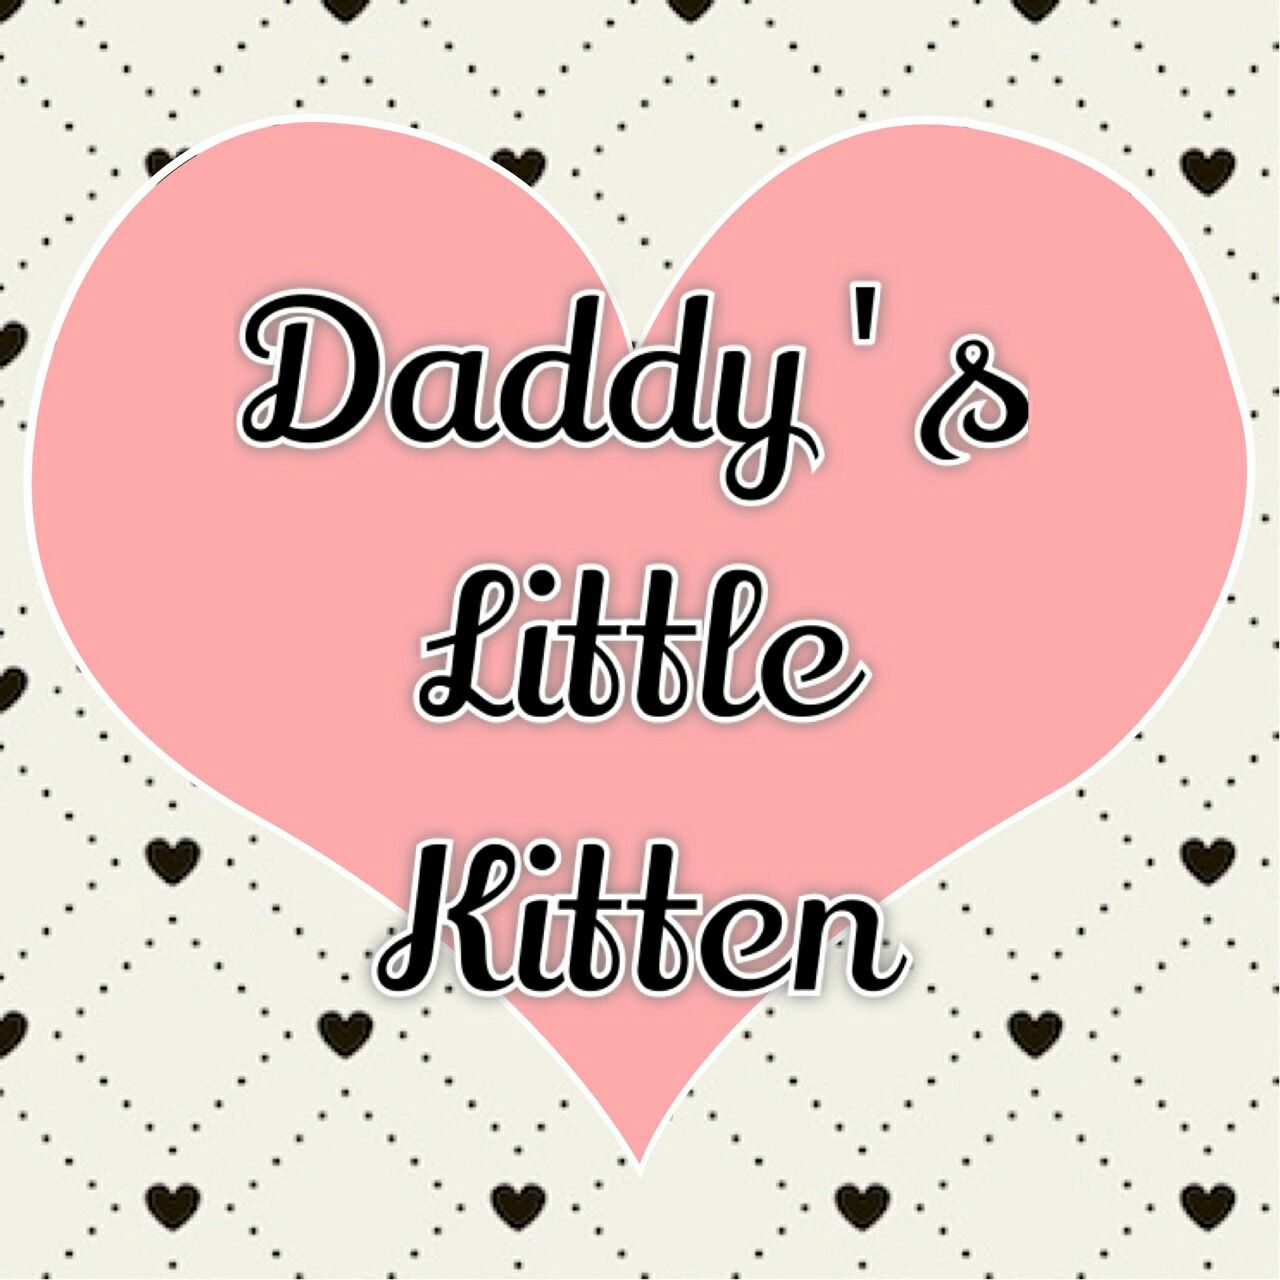 Faeacaa Kinky Kitten Daddys Girl Wallpaper Wp5001426